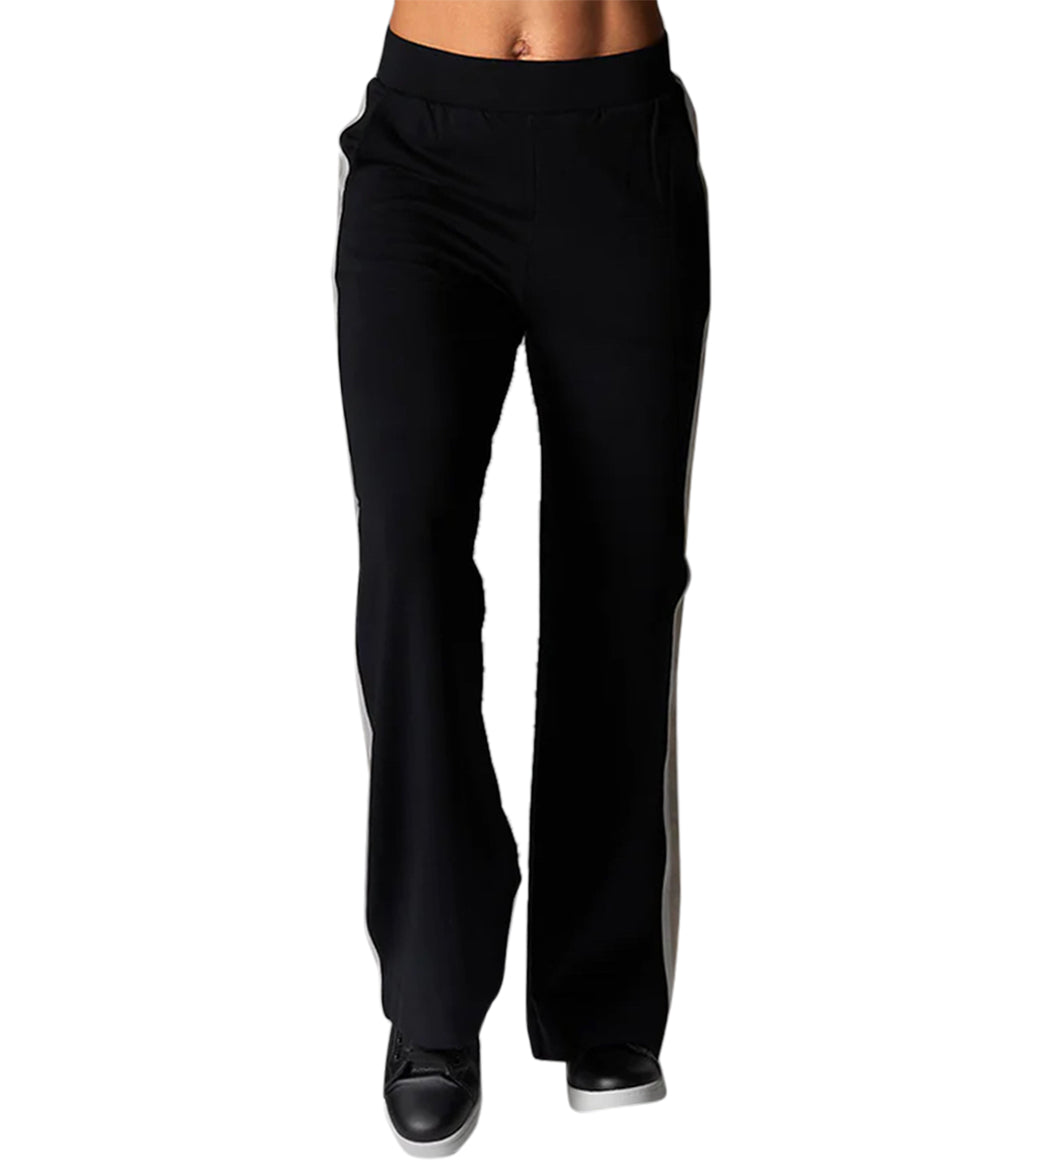 YWDJ Wide Leg Yoga Pants for Women Women Fashionable Yoga Pants